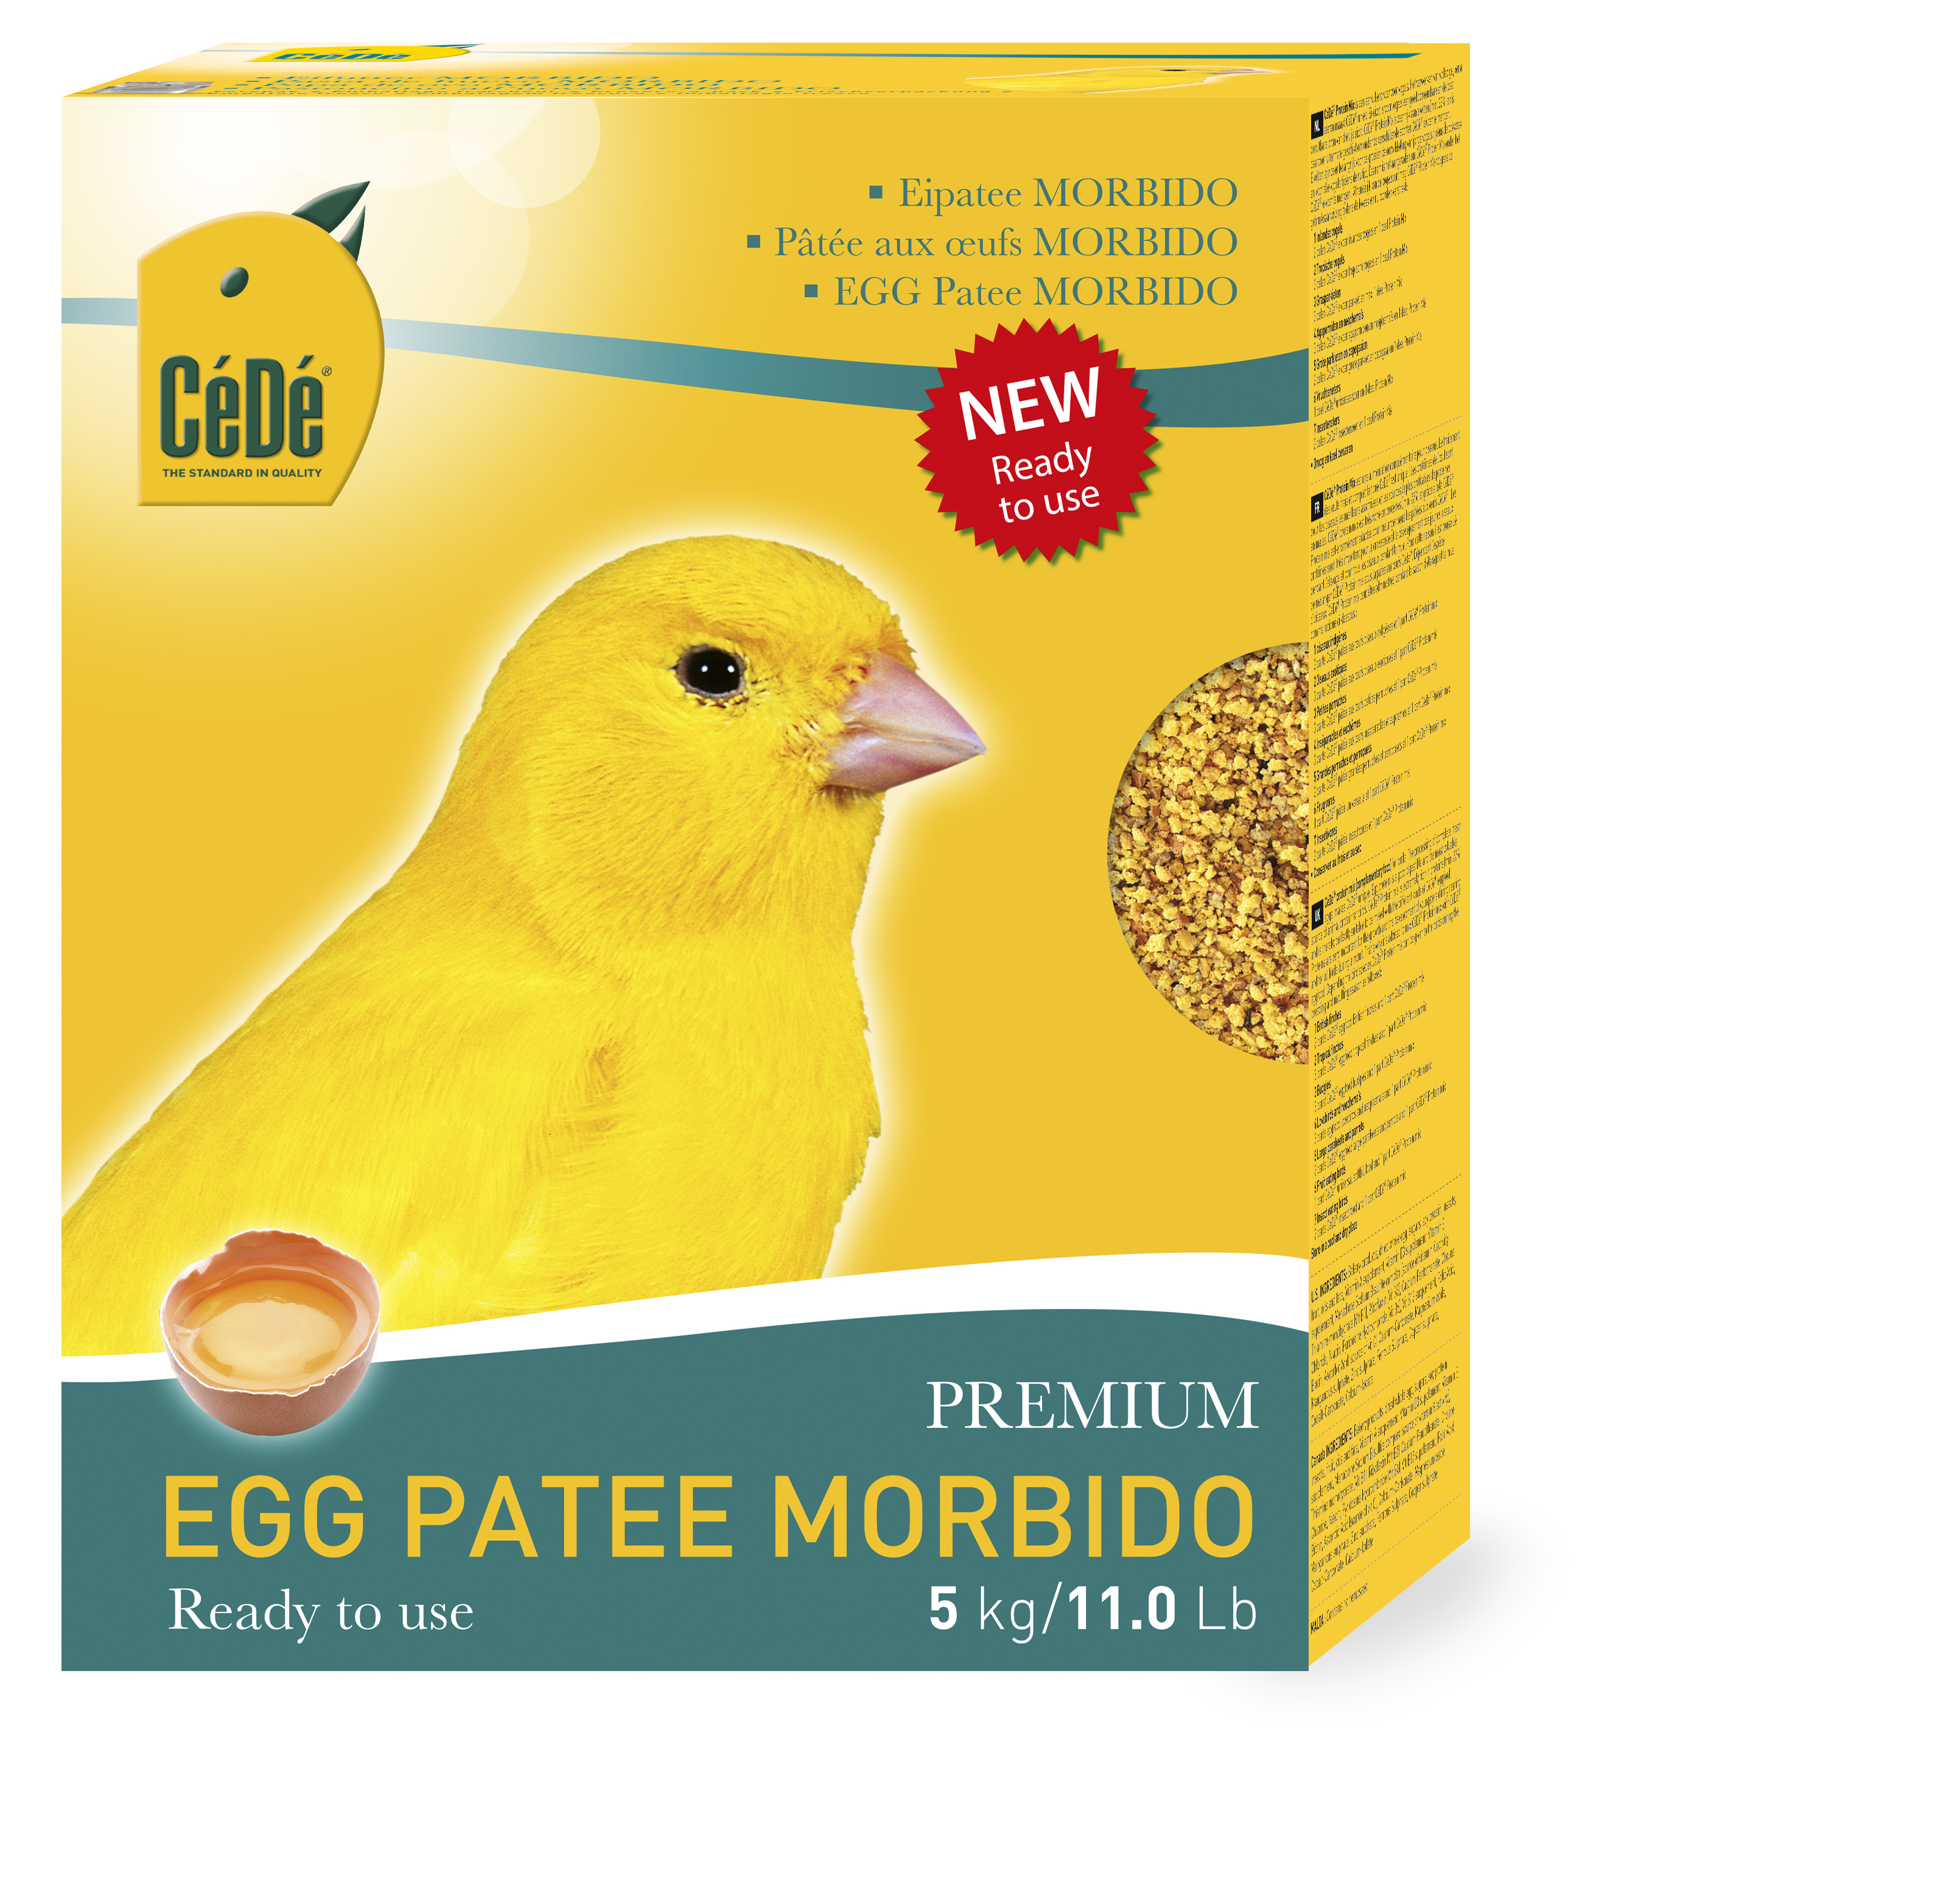 Eggfood morbido half fat - <Product shot>